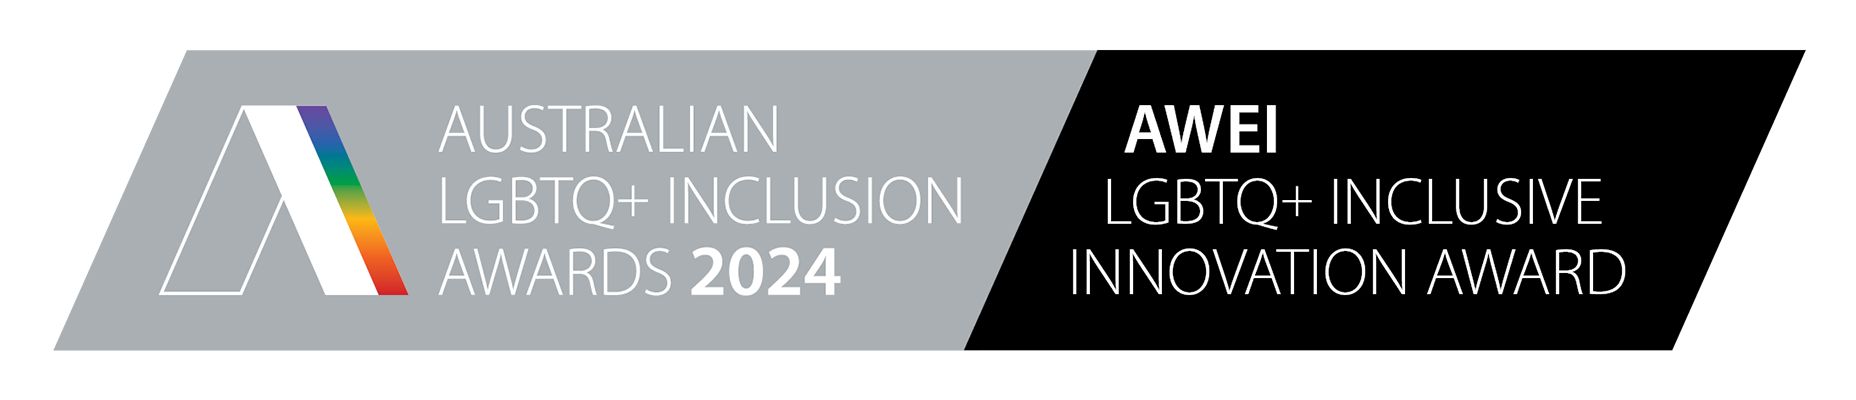  Australian LGBTQ+ Inclusion Awards 2024 – Innovation Award badge